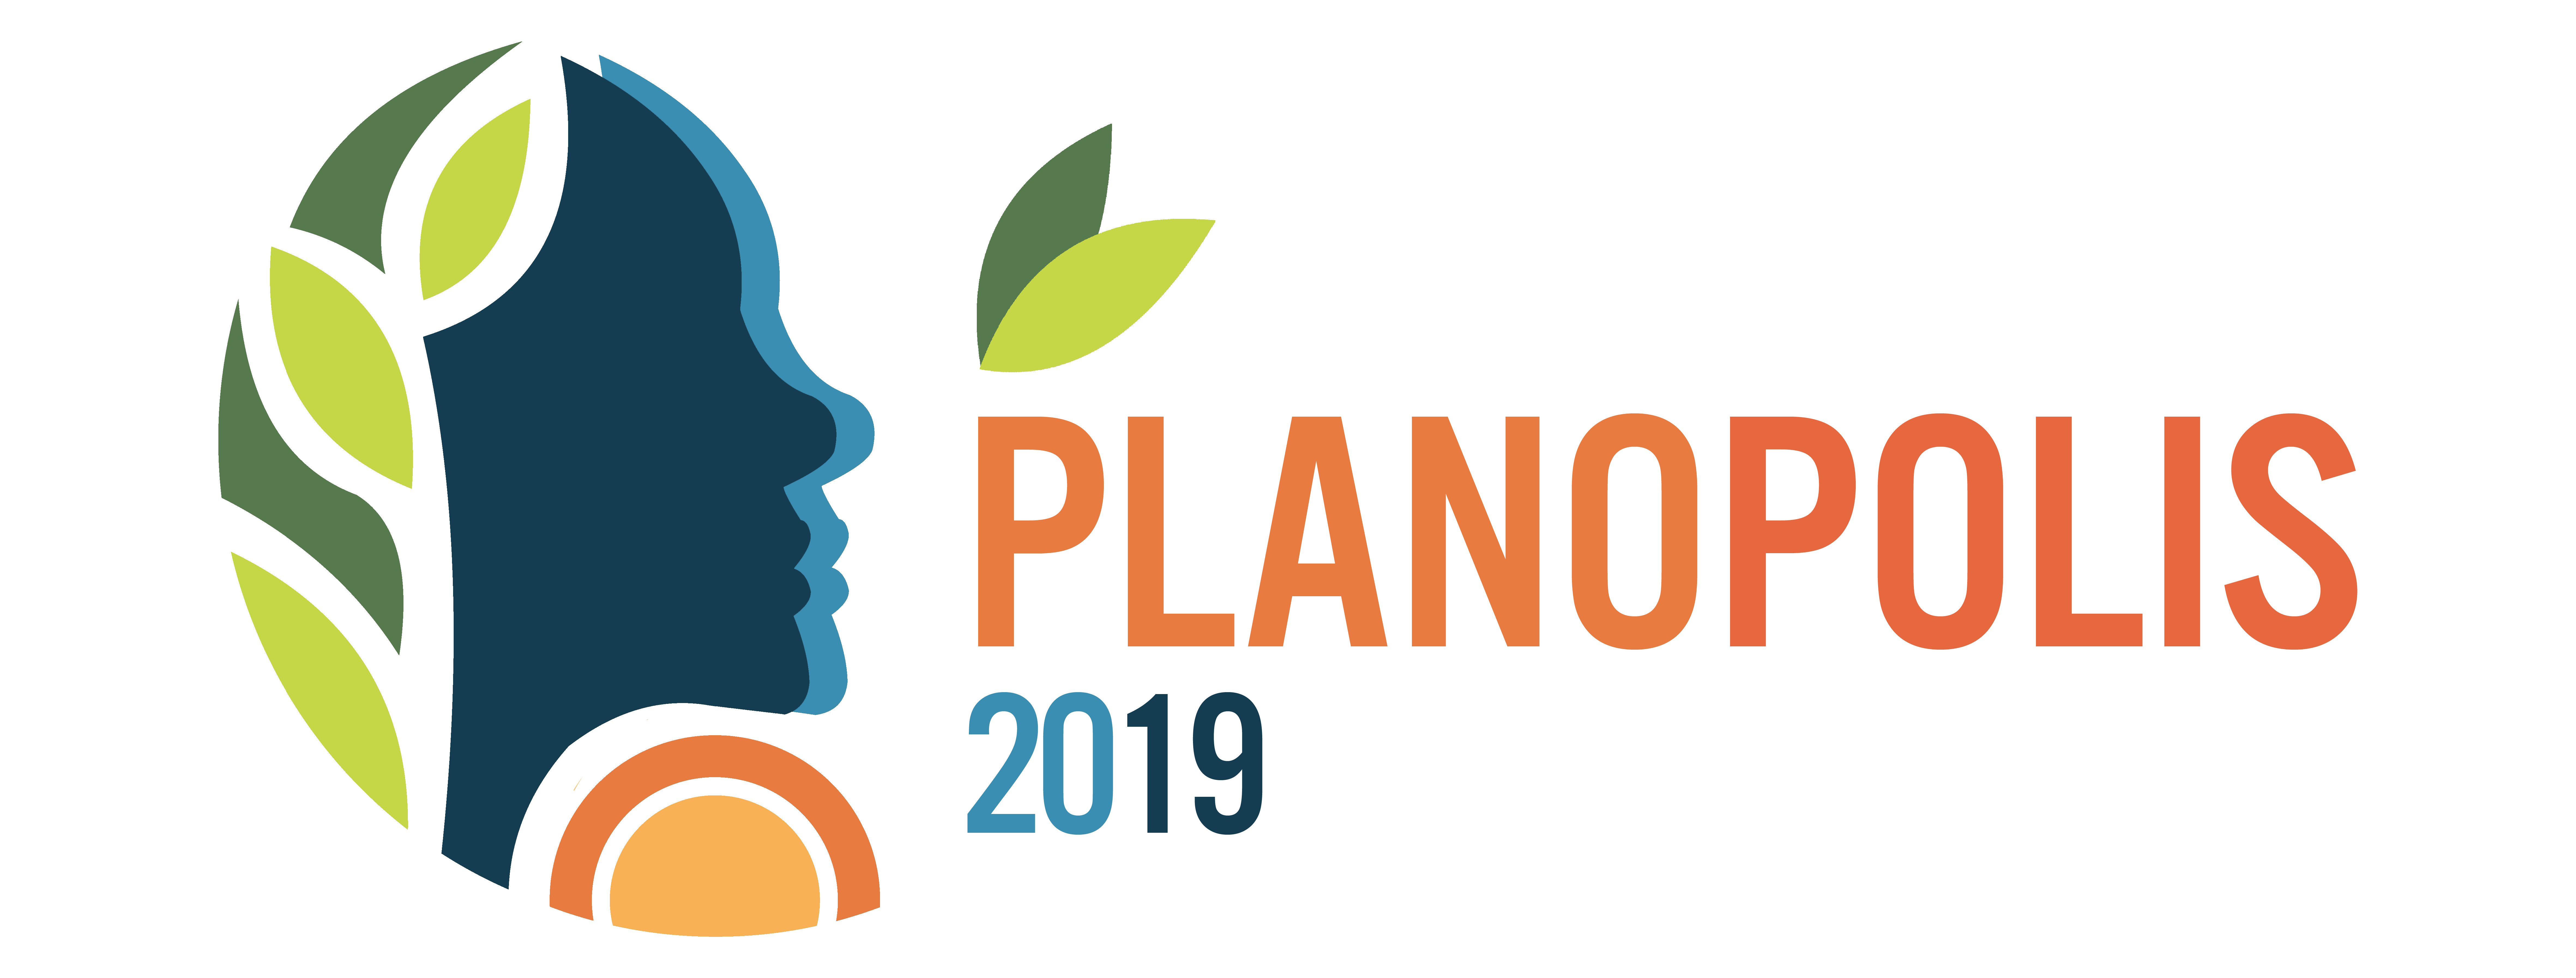 PLANOPOLIS 2019